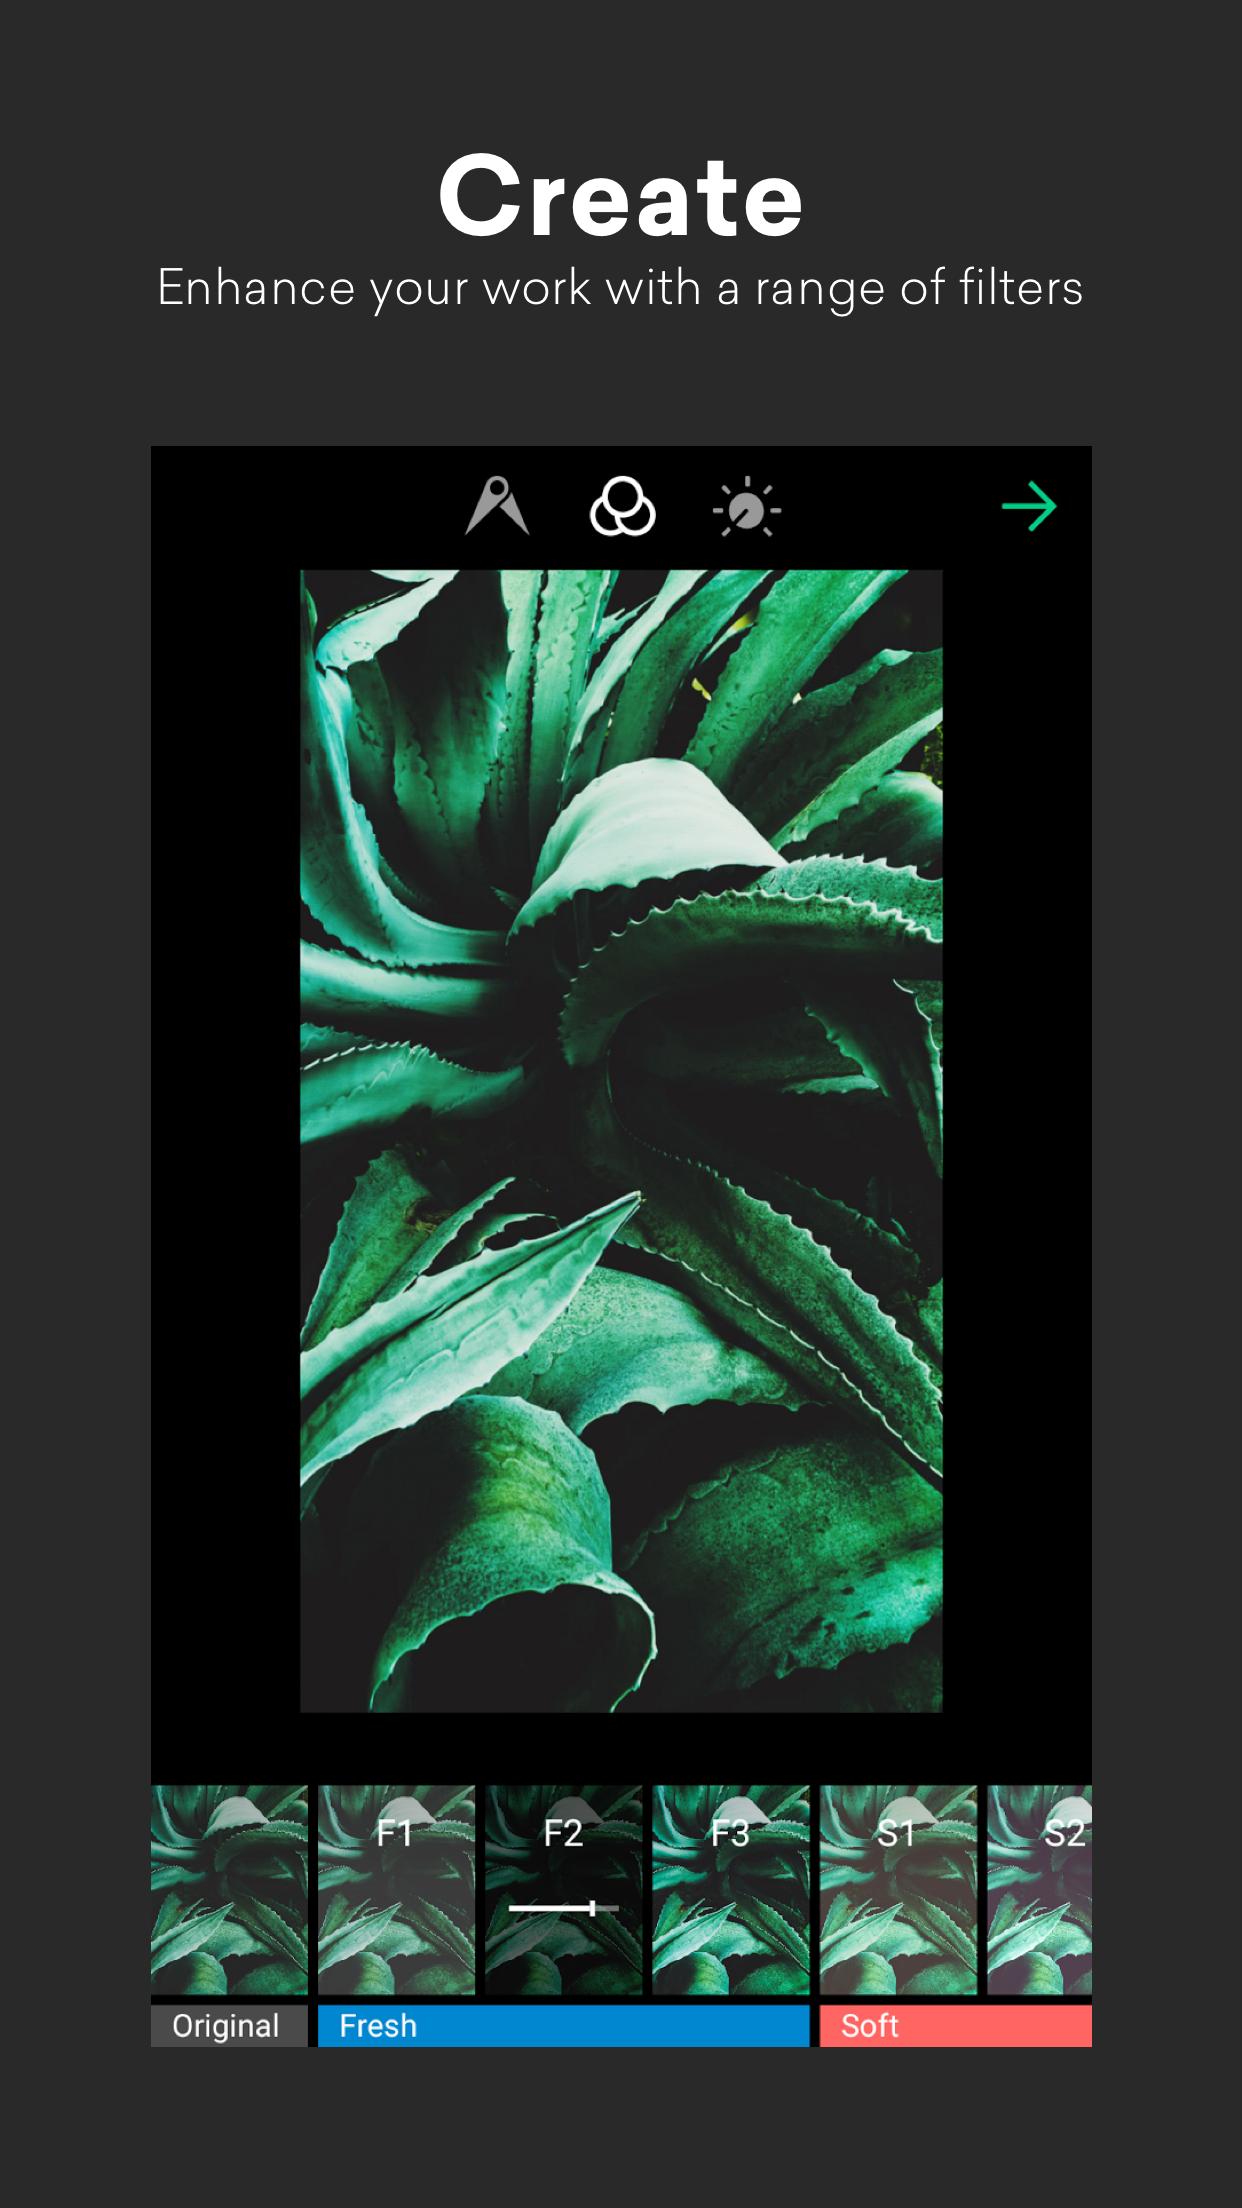 EyeEm Free Photo App For Sharing & Selling Images 8.1 Screenshot 3